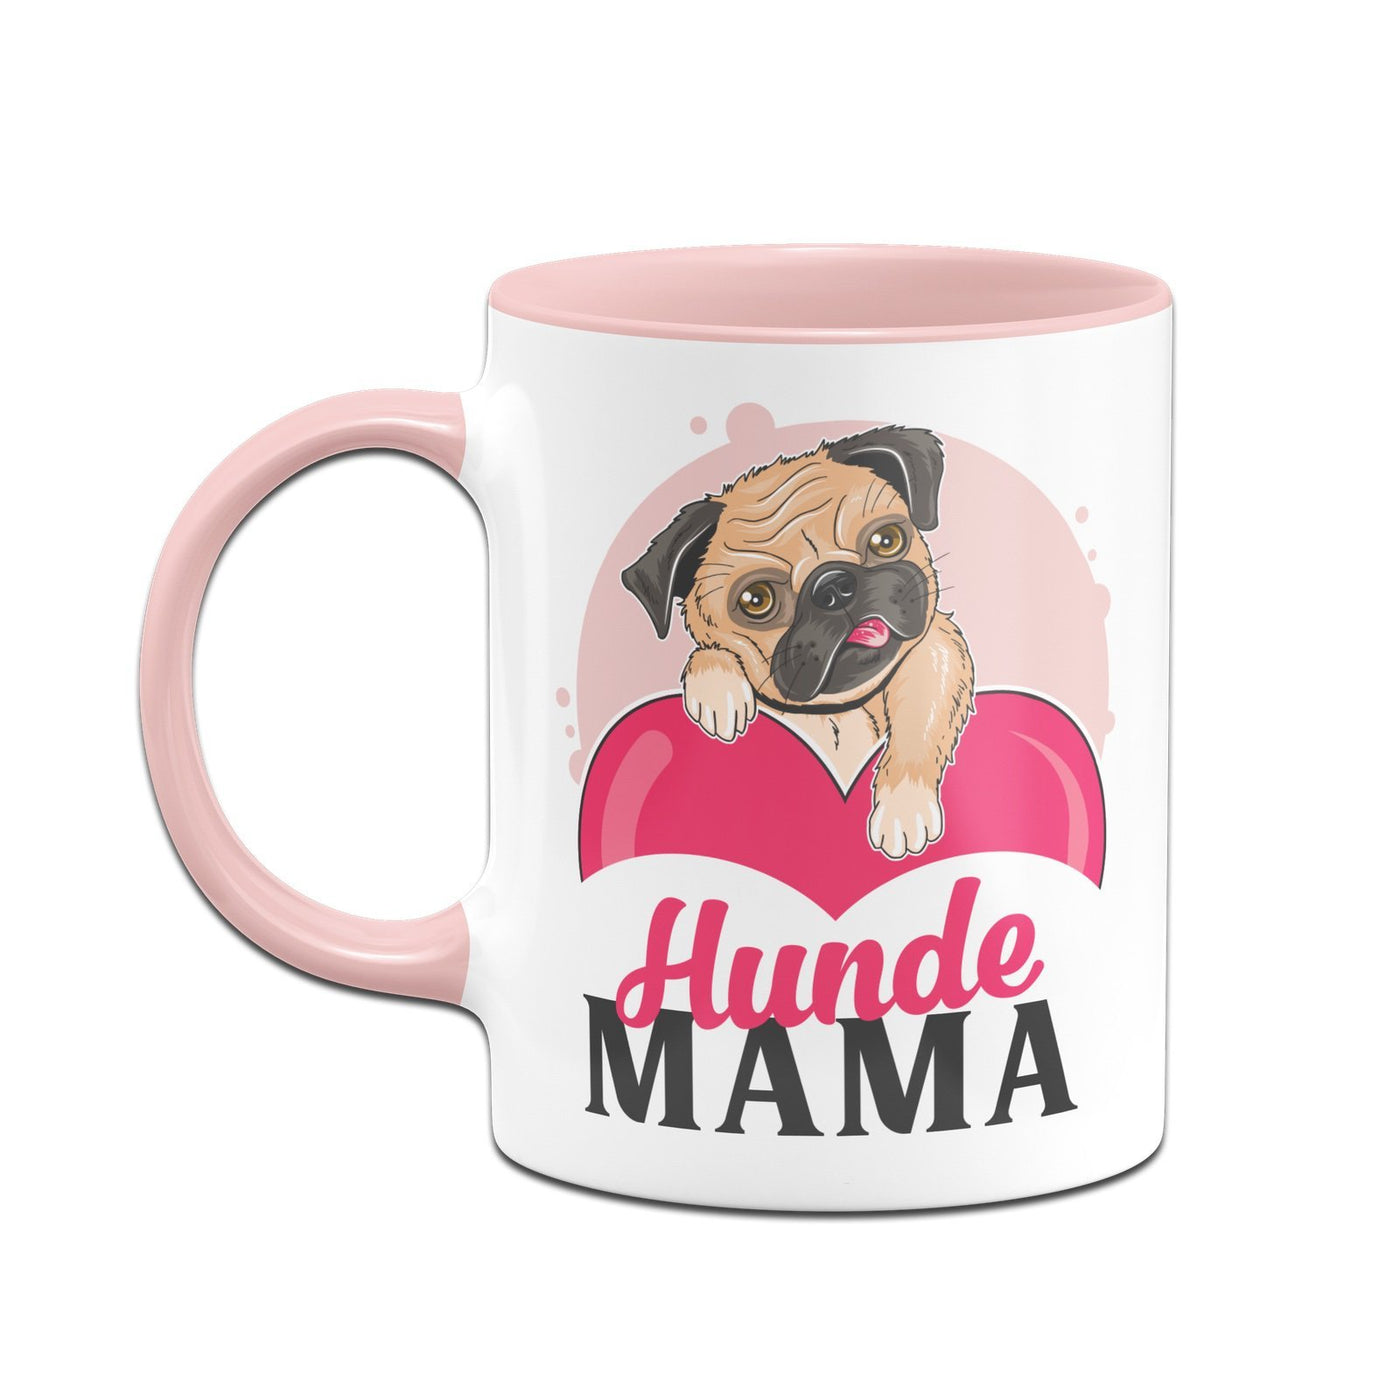 Bild: Tasse - Hunde-Mama Geschenkidee